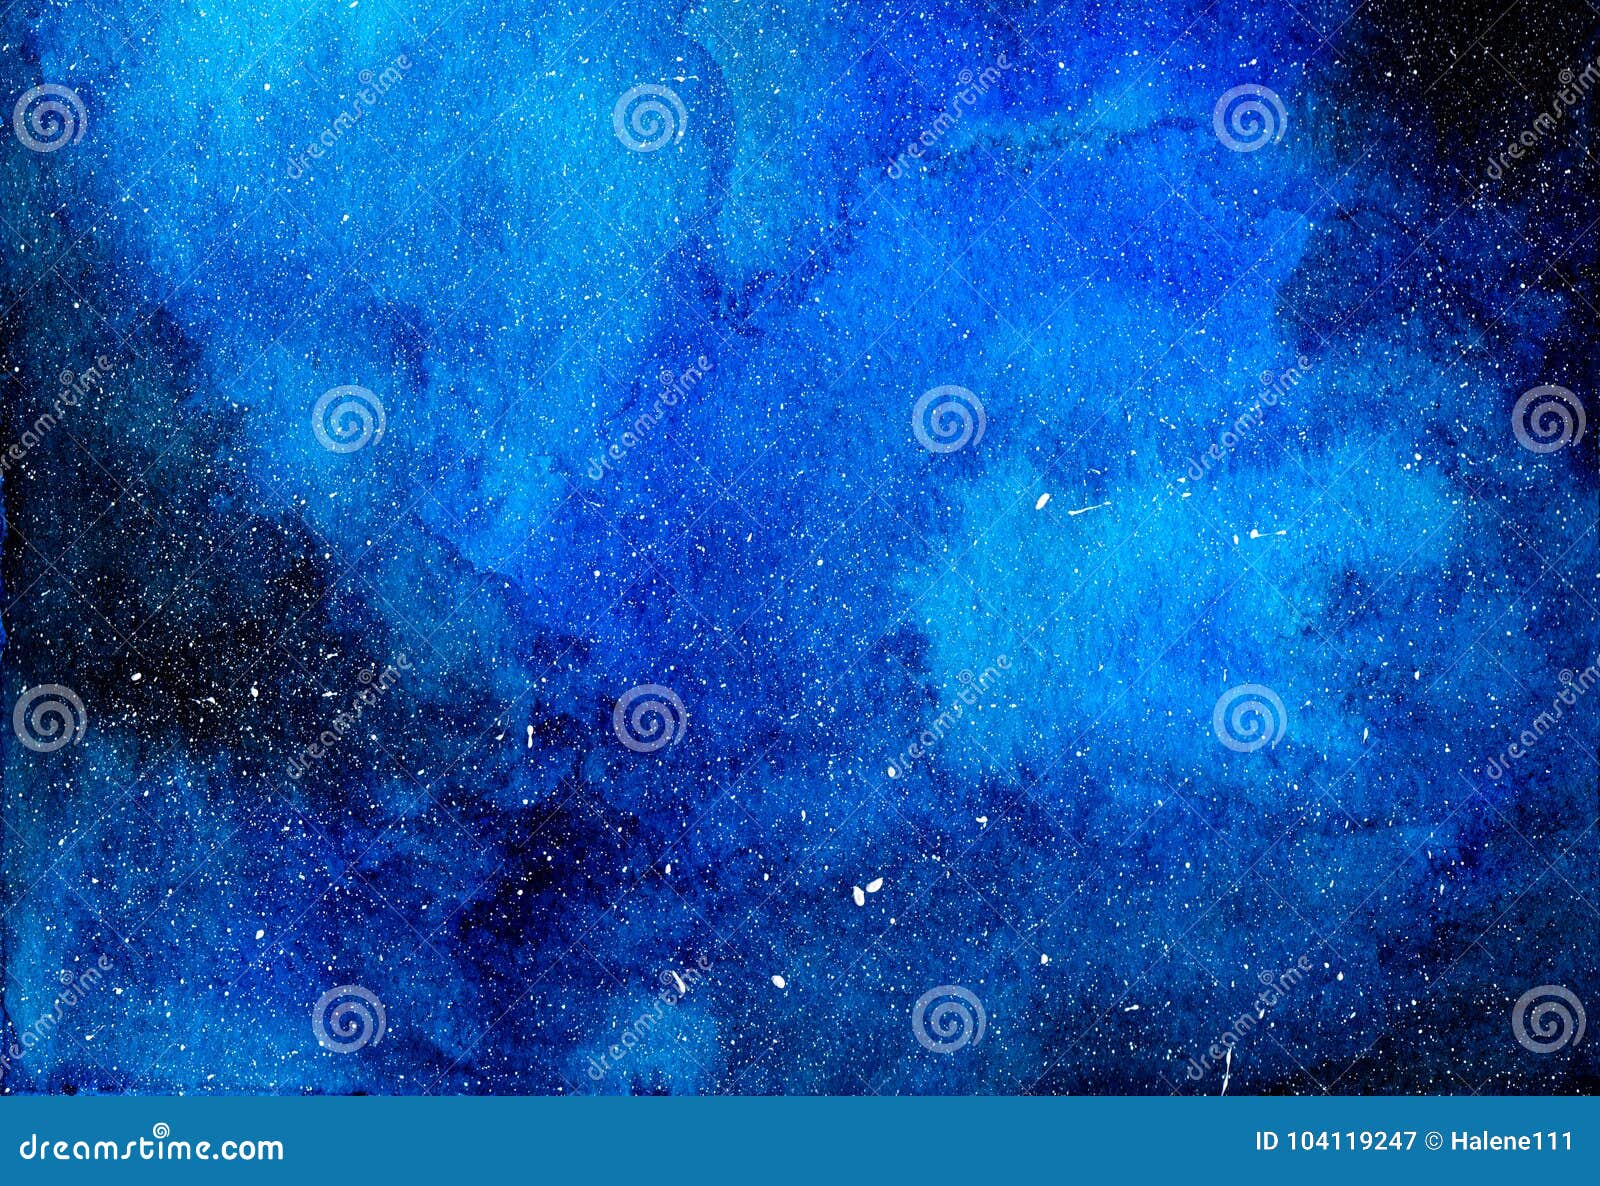 Starry Night Sky Blue Watercolor Illustration Stock